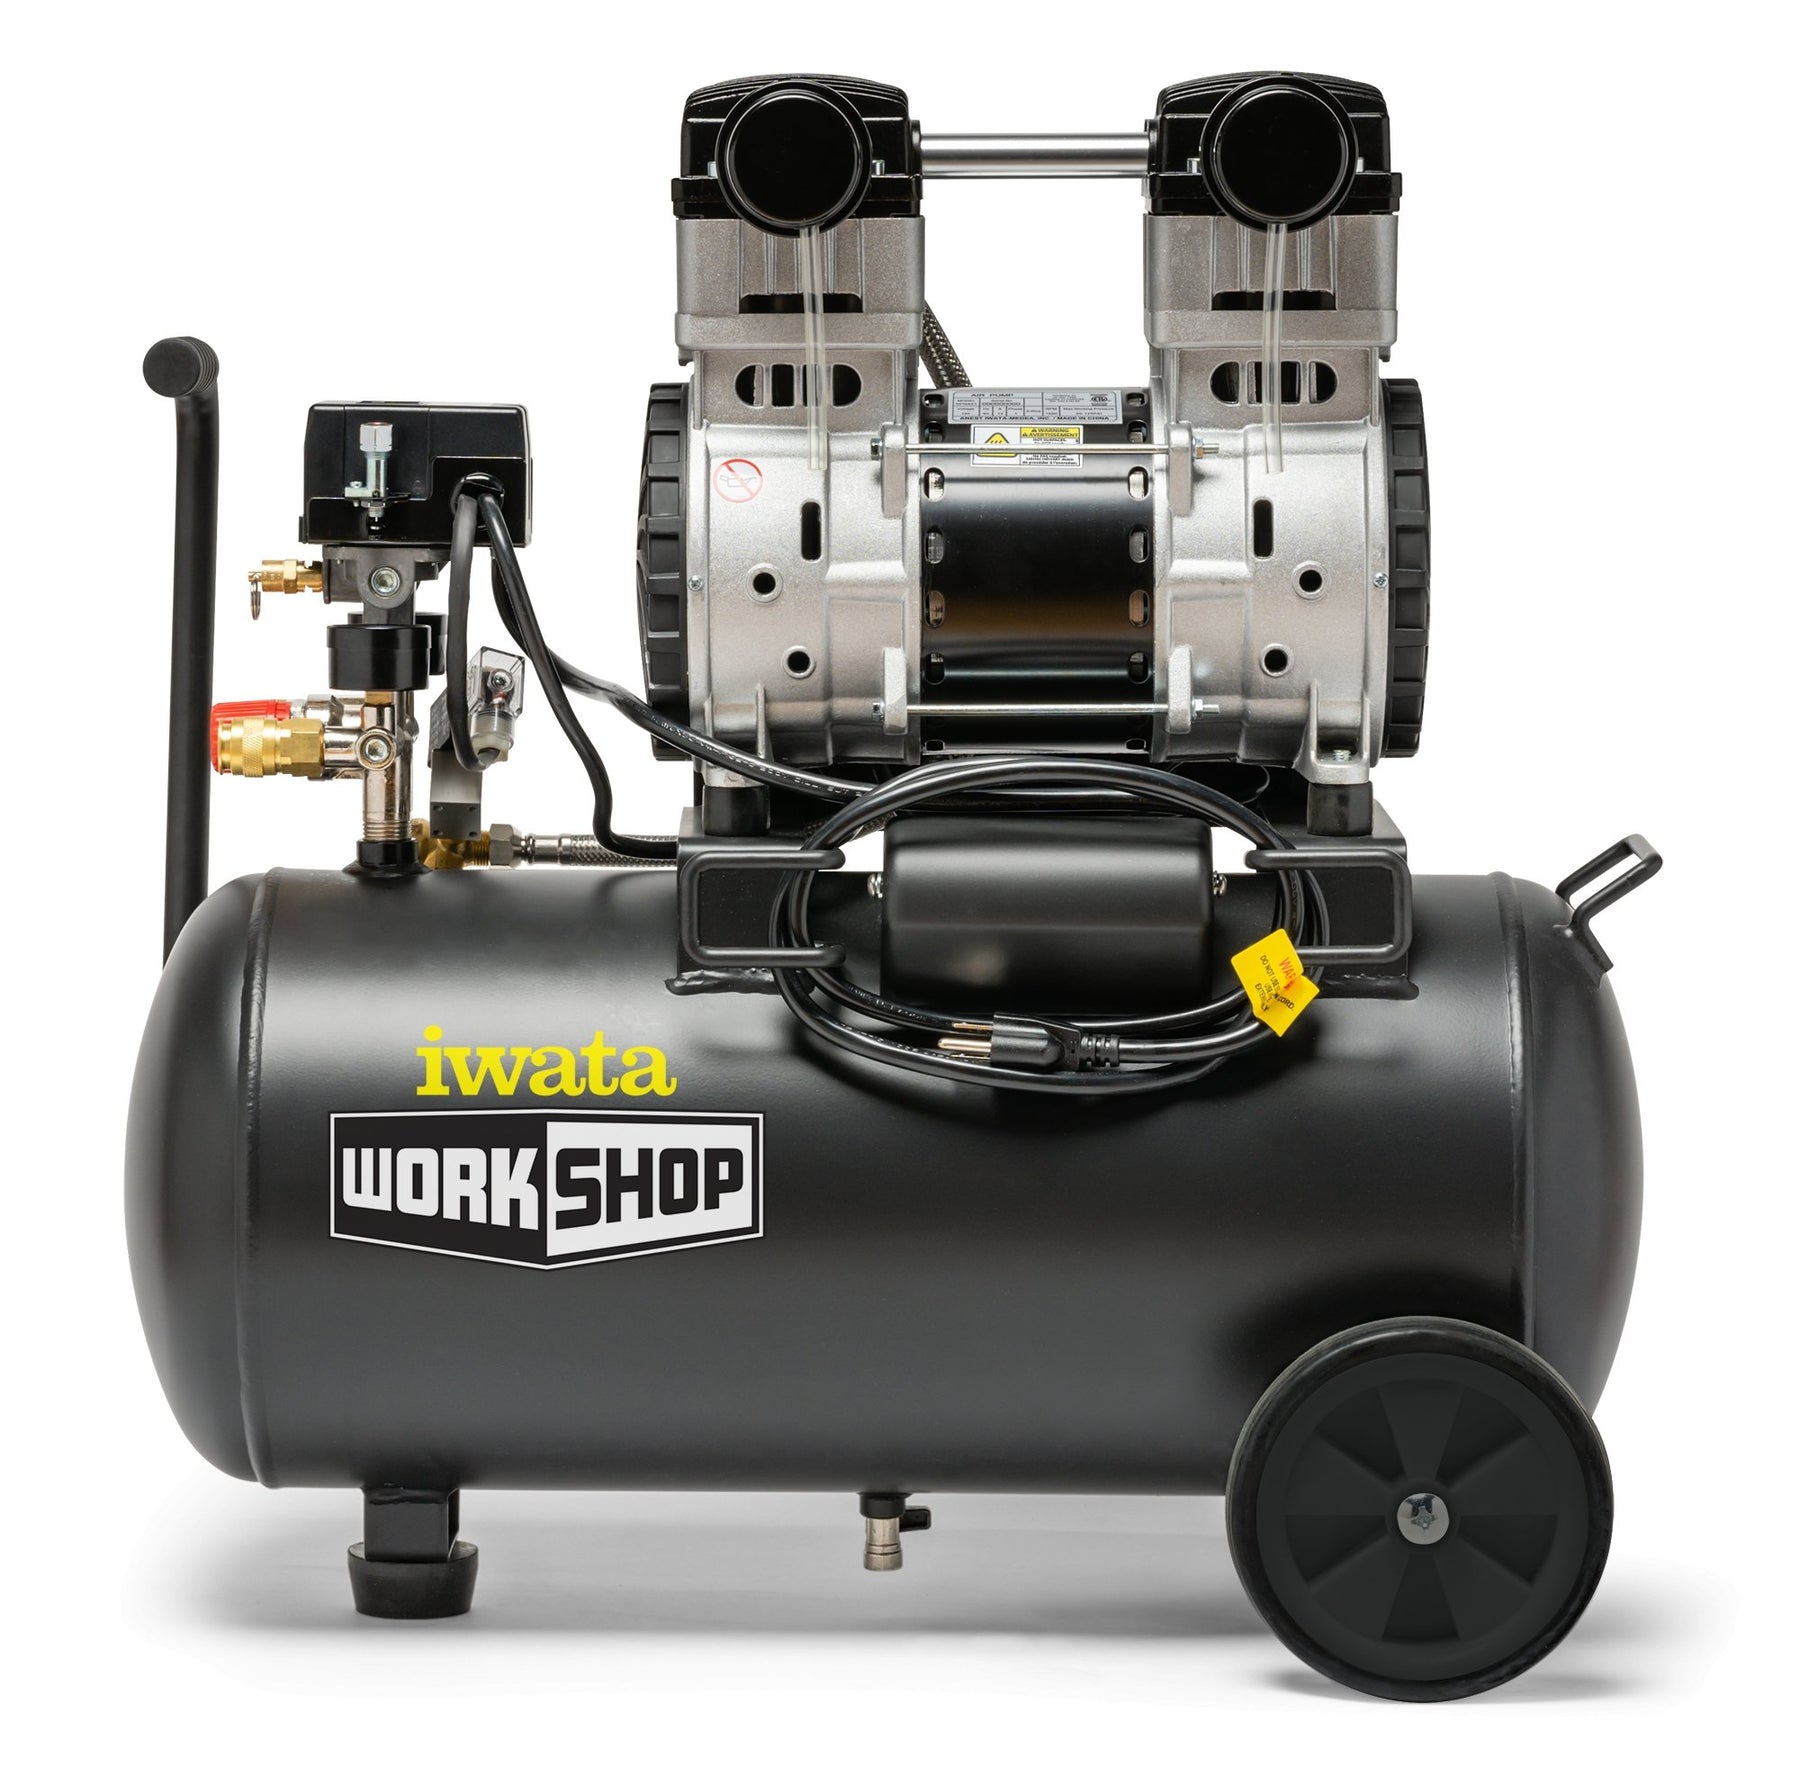 Iwata Workshop IWC28S Quiet Air Compressor (Not shippable to Alaska or Hawaii) - merriartist.com